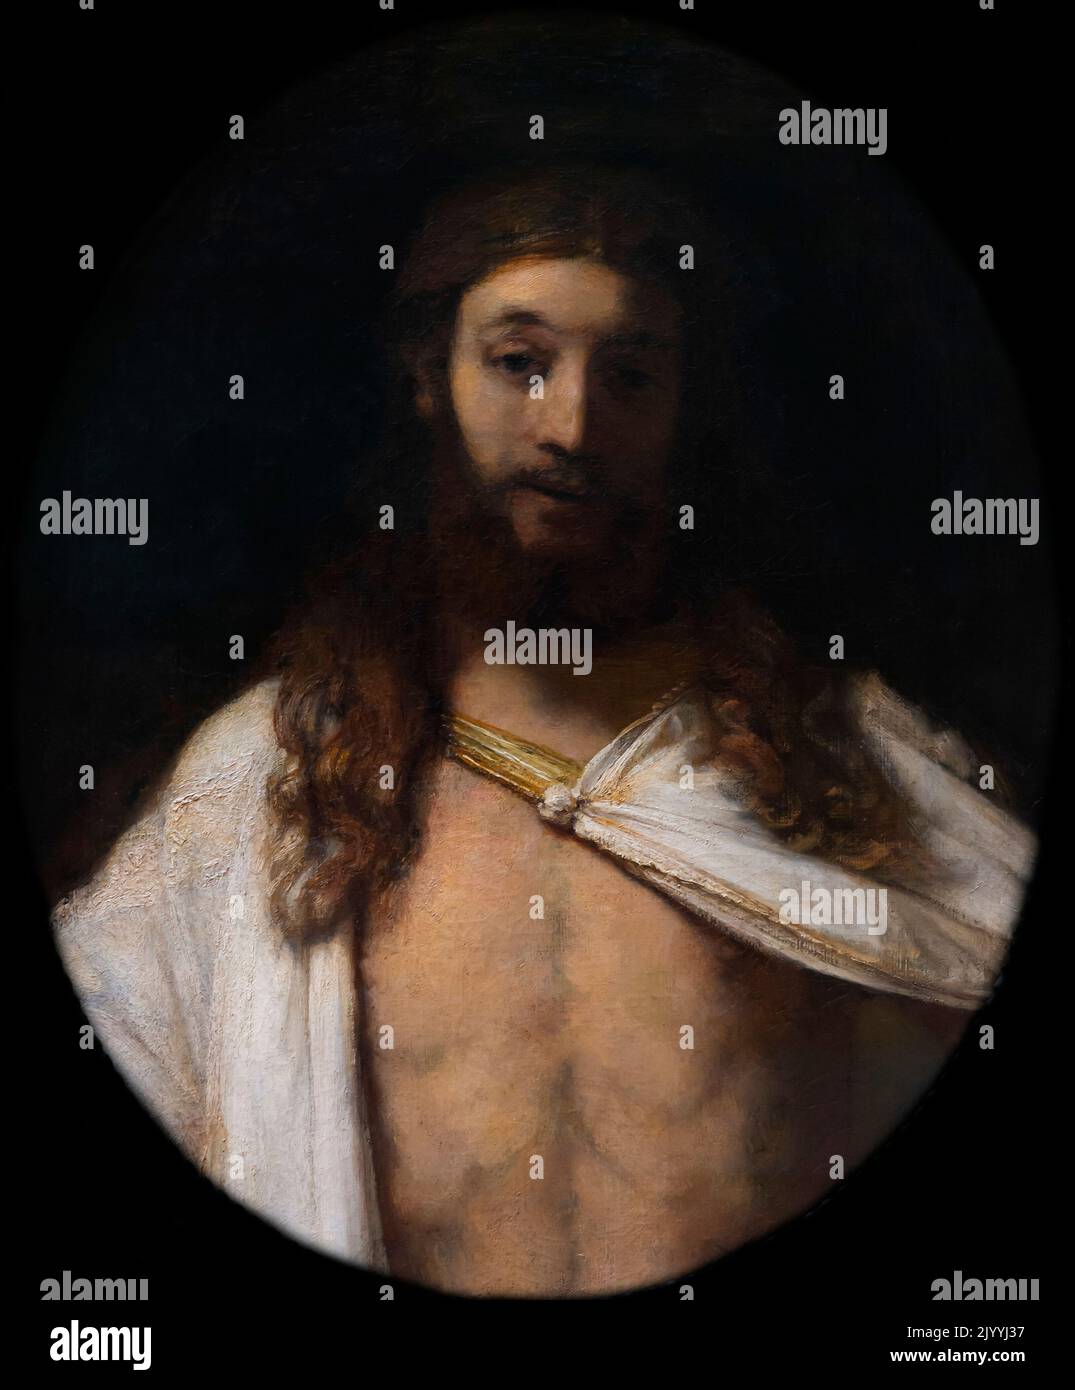 El Cristo resucitado, Rembrandt, 1661, Alte Pinakothek, Múnich, Alemania Foto de stock